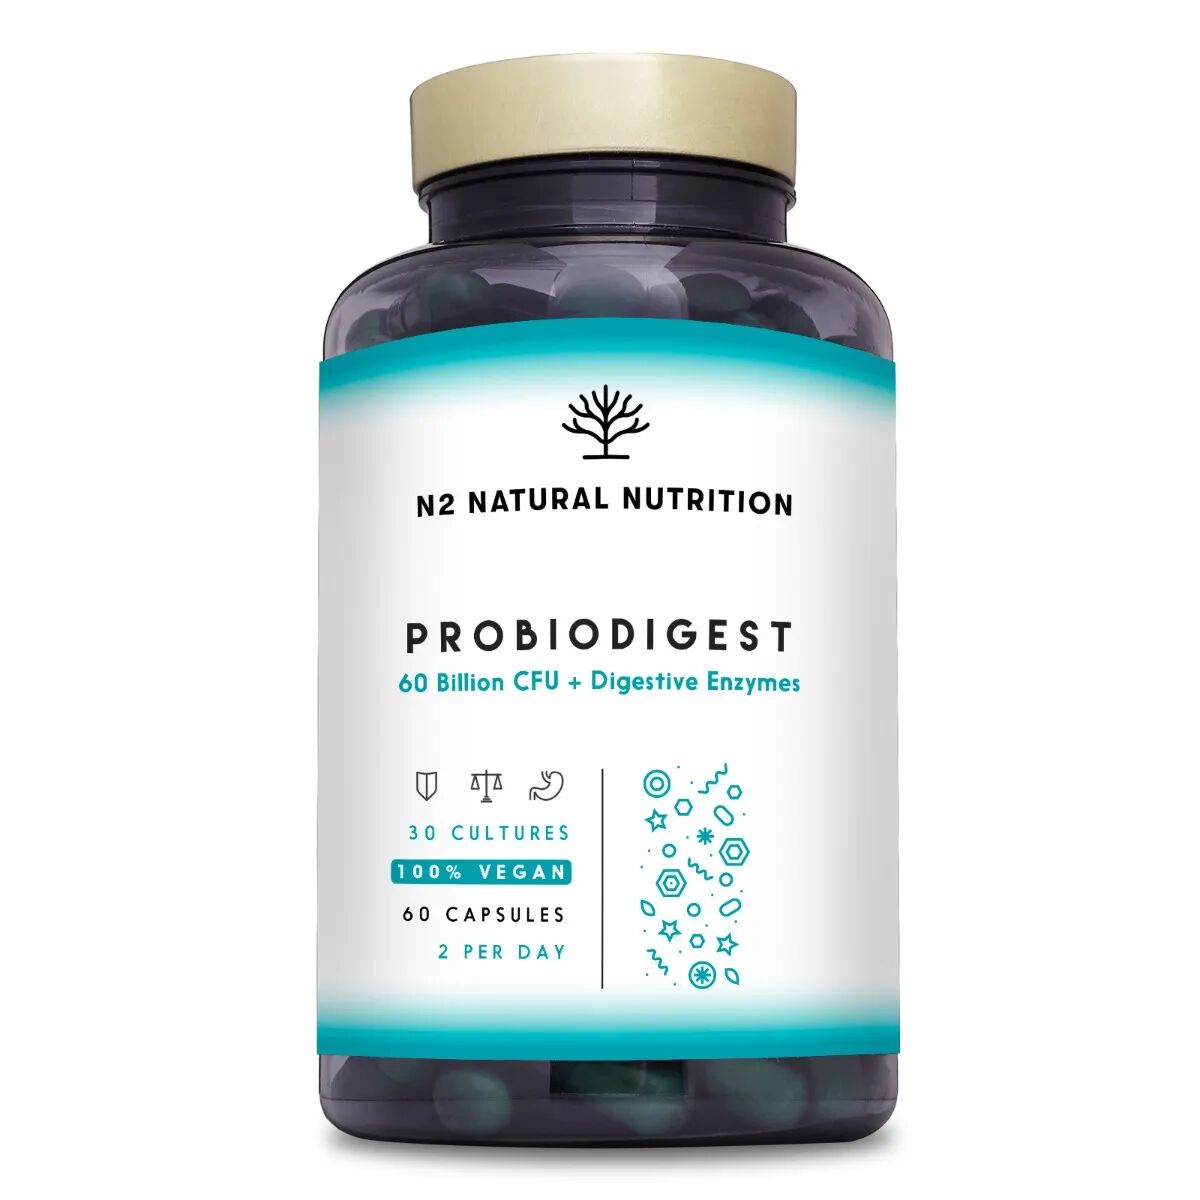 n2 natural nutrition probiodigest probiotici e prebiotici con enzimi digestivi e zinco 60 capsule vegane